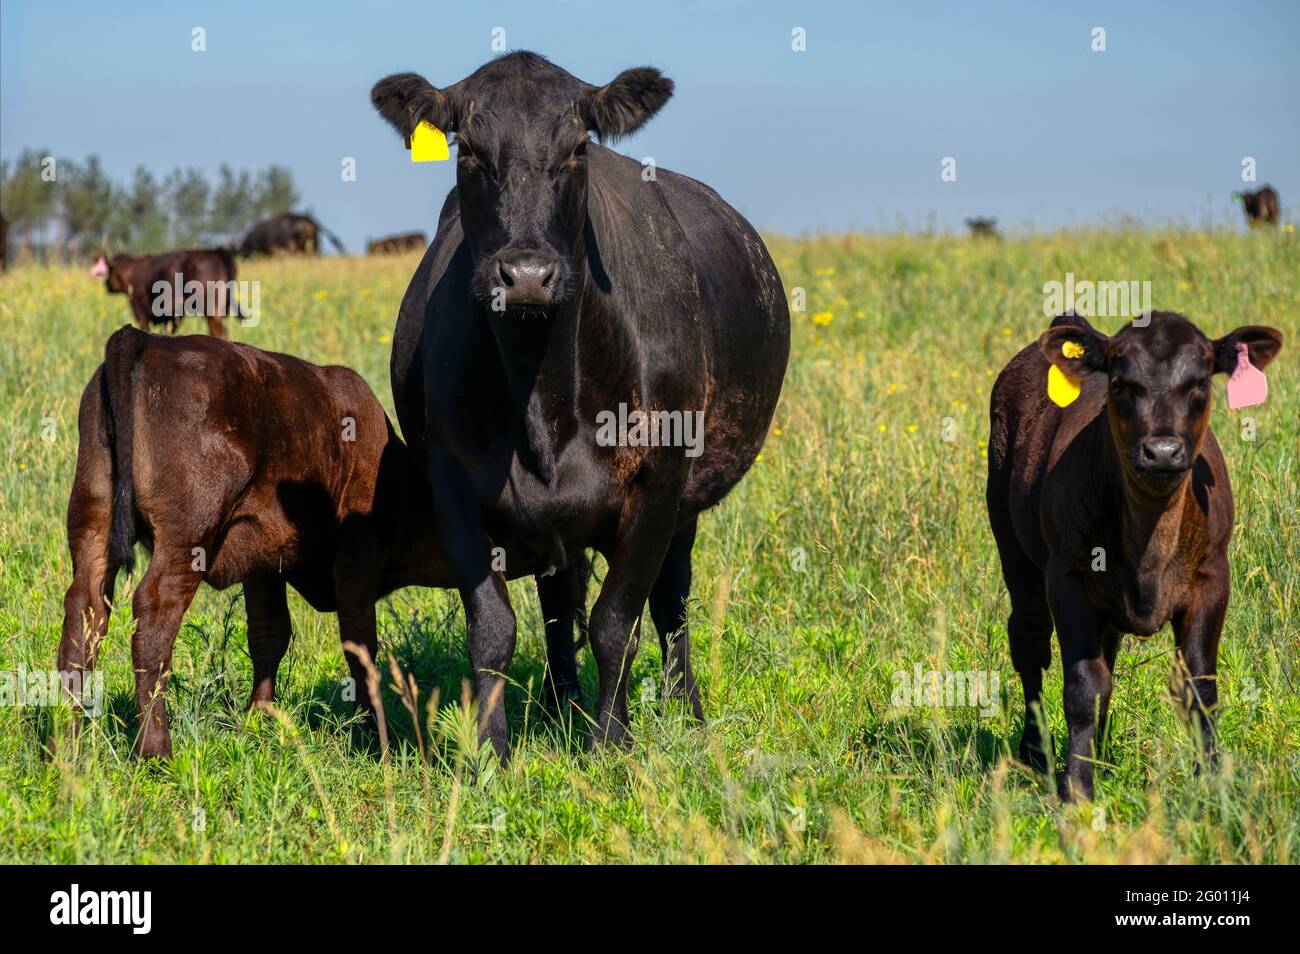 https://c8.alamy.com/comp/2G011J4/a-black-angus-cow-and-calf-graze-on-a-green-meadow-2G011J4.jpg